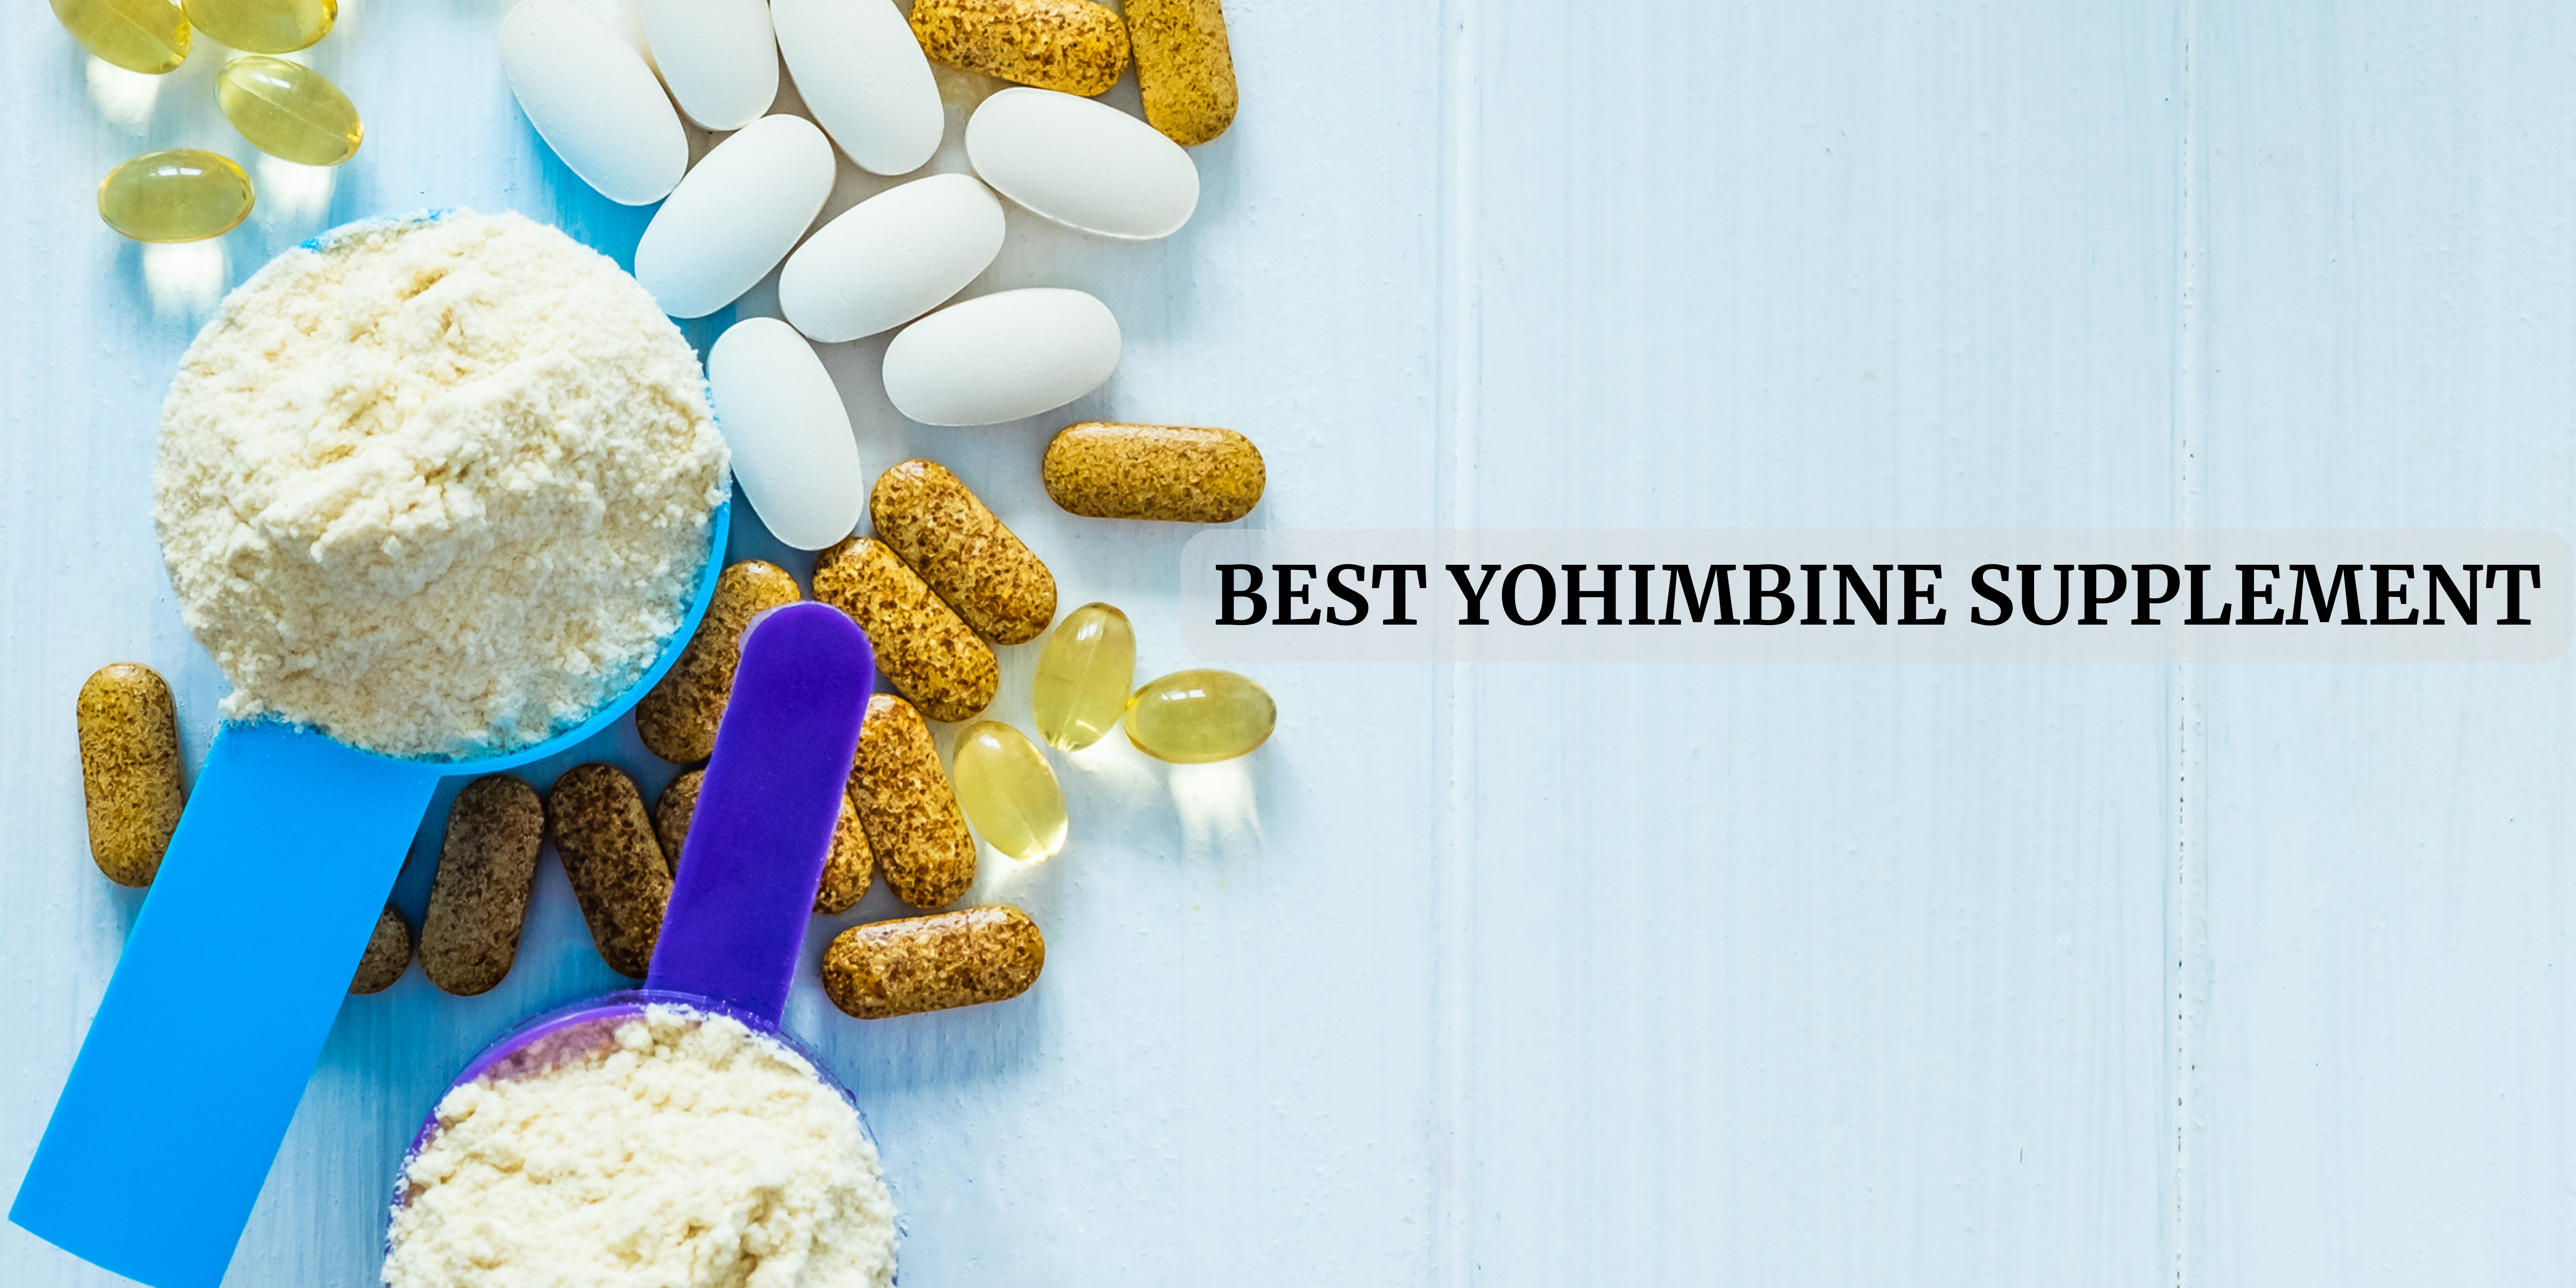 Yohimbine Supplement in Japan